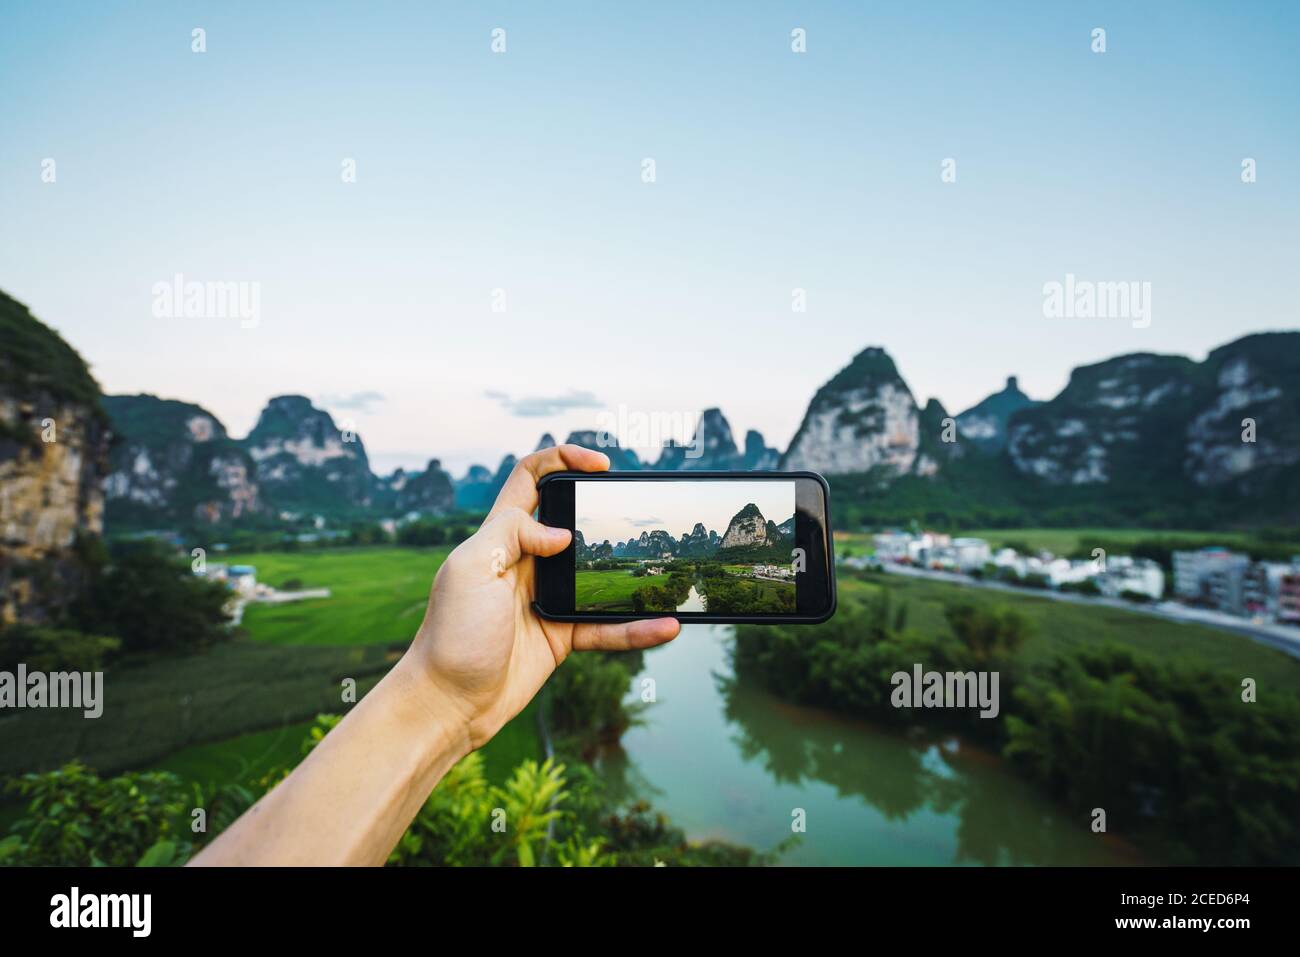 Hand taking photo of Guangxi province landscape Stock Photo